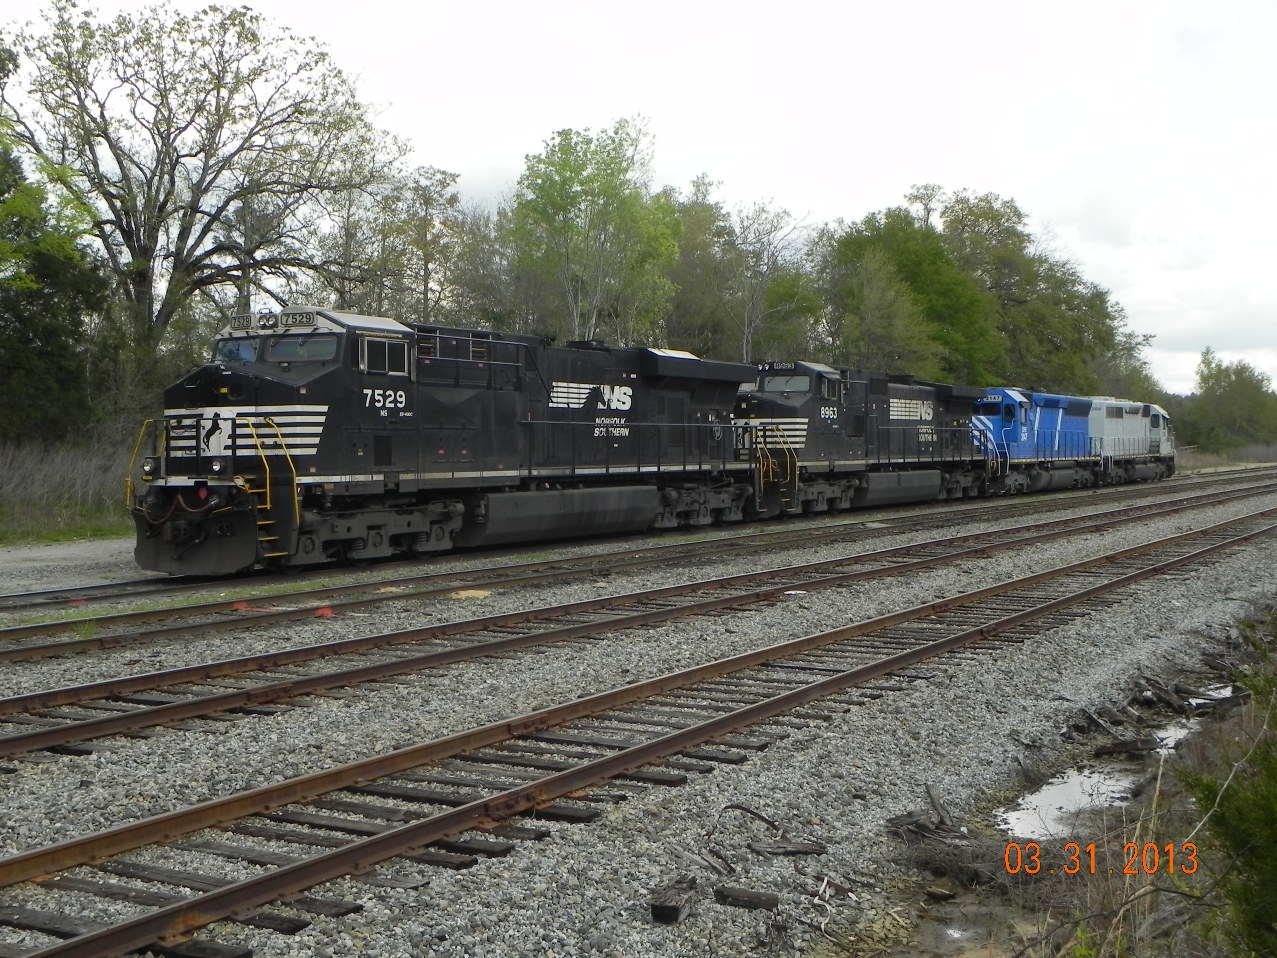 Coal train power